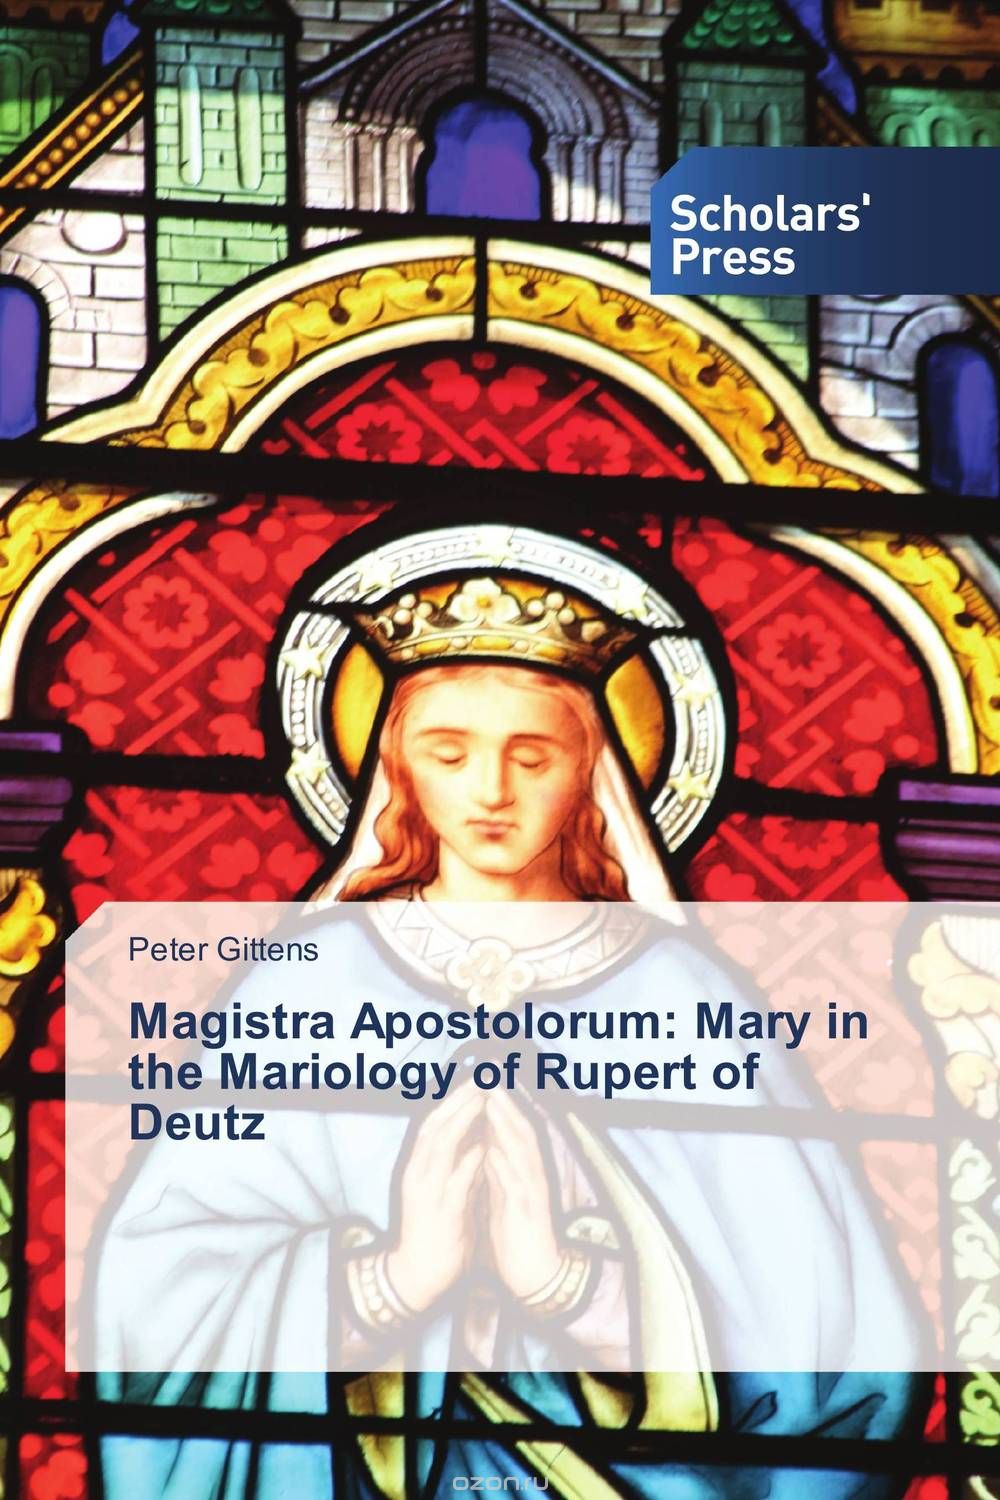 Скачать книгу "Magistra Apostolorum: Mary in the Mariology of Rupert of Deutz"